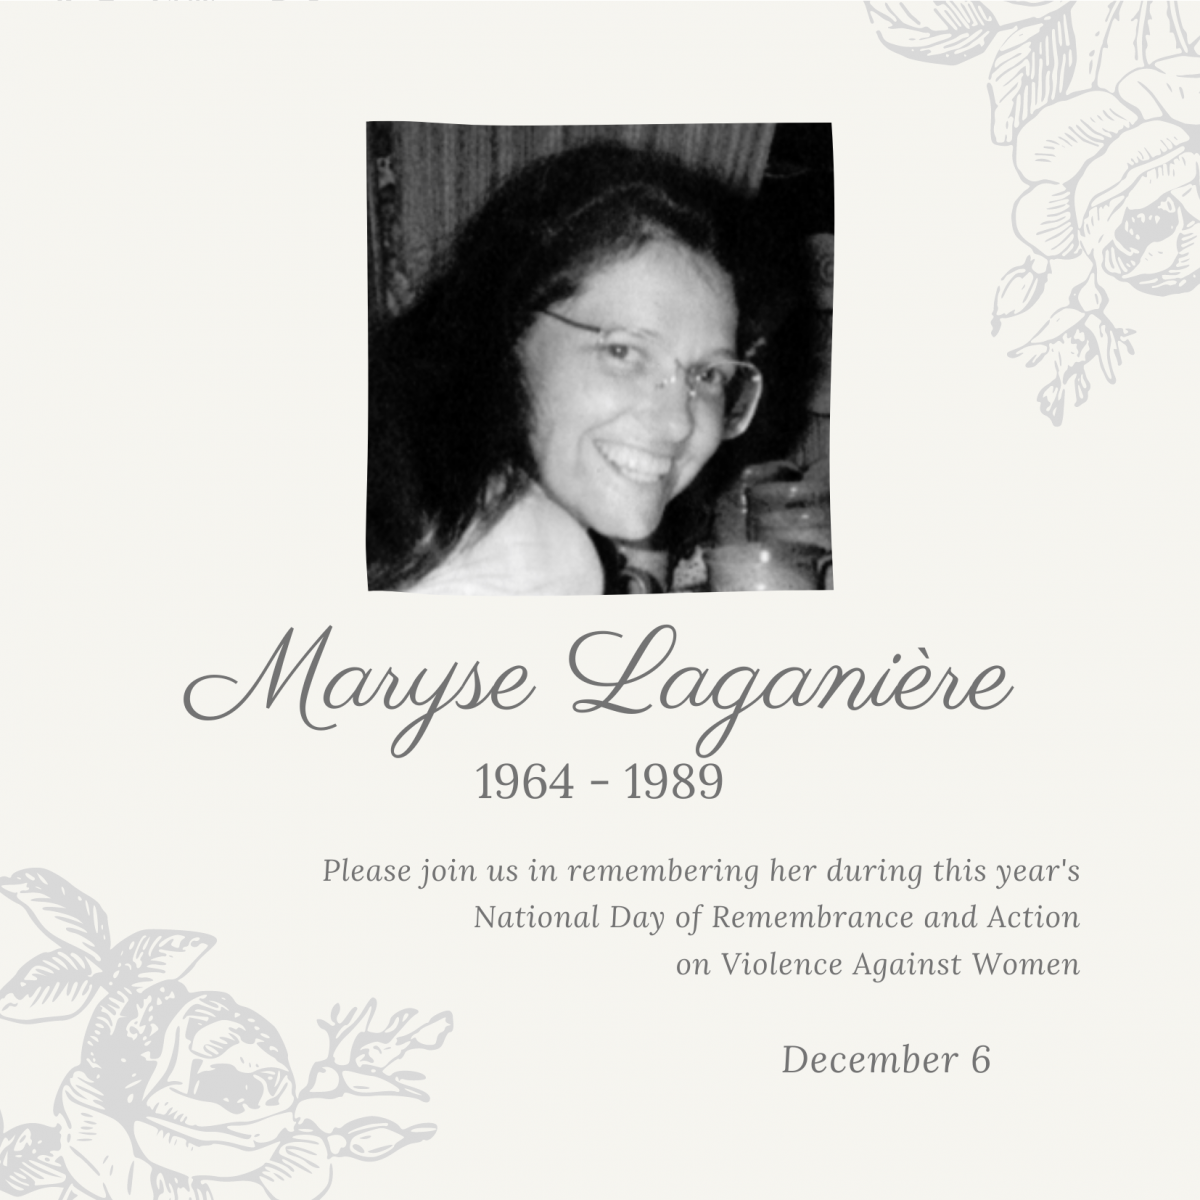 Maryse Laganière. 1964 to 1989.